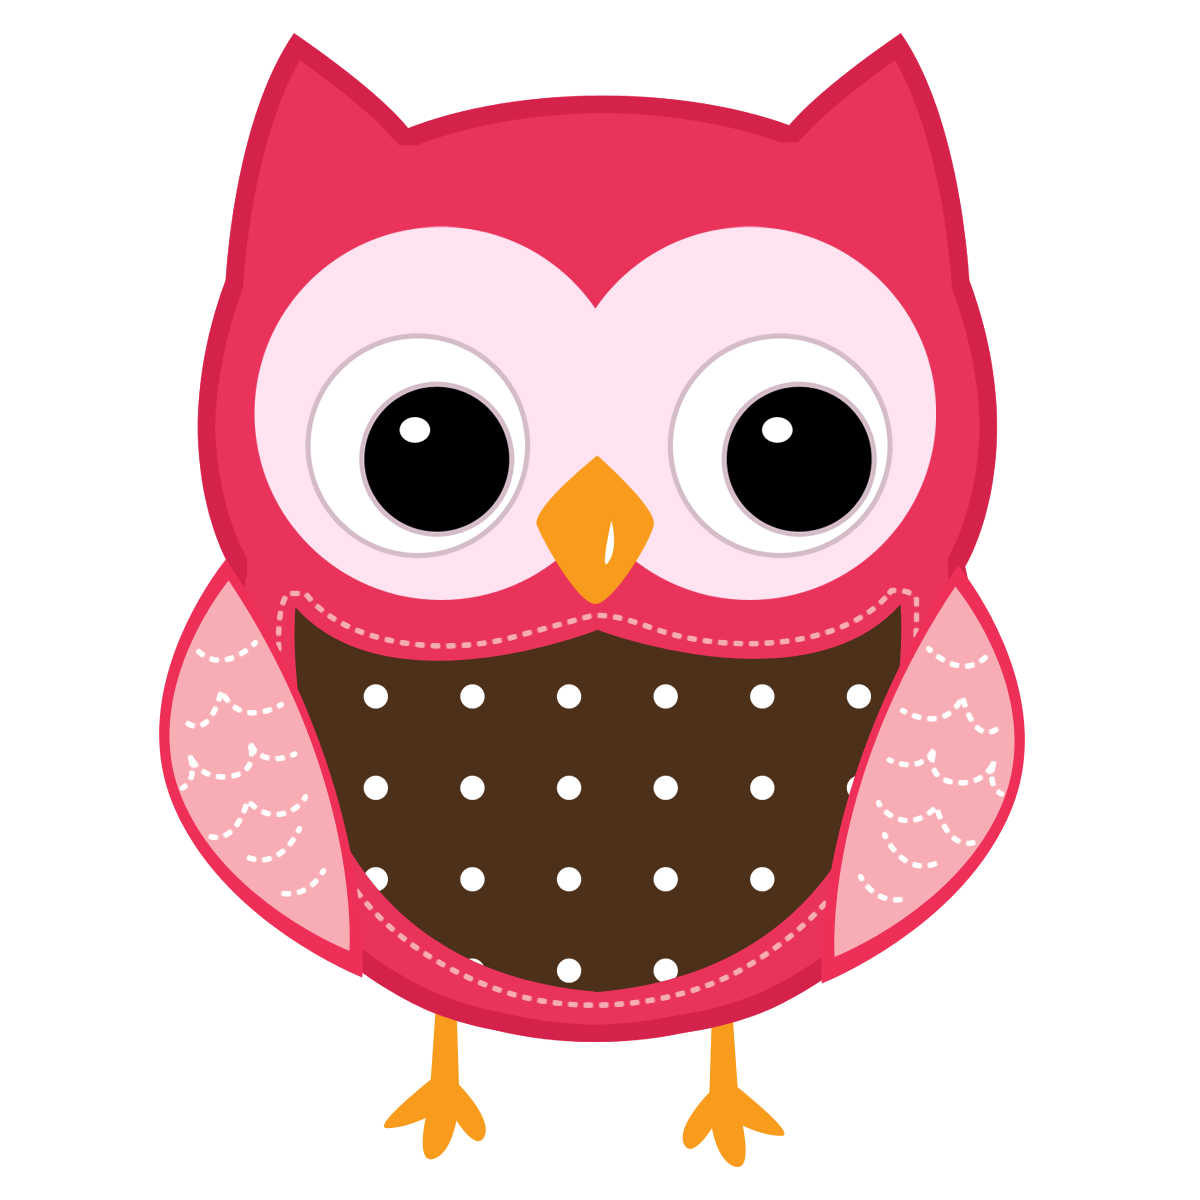 Owl Clip Art - Owl Clipart Free